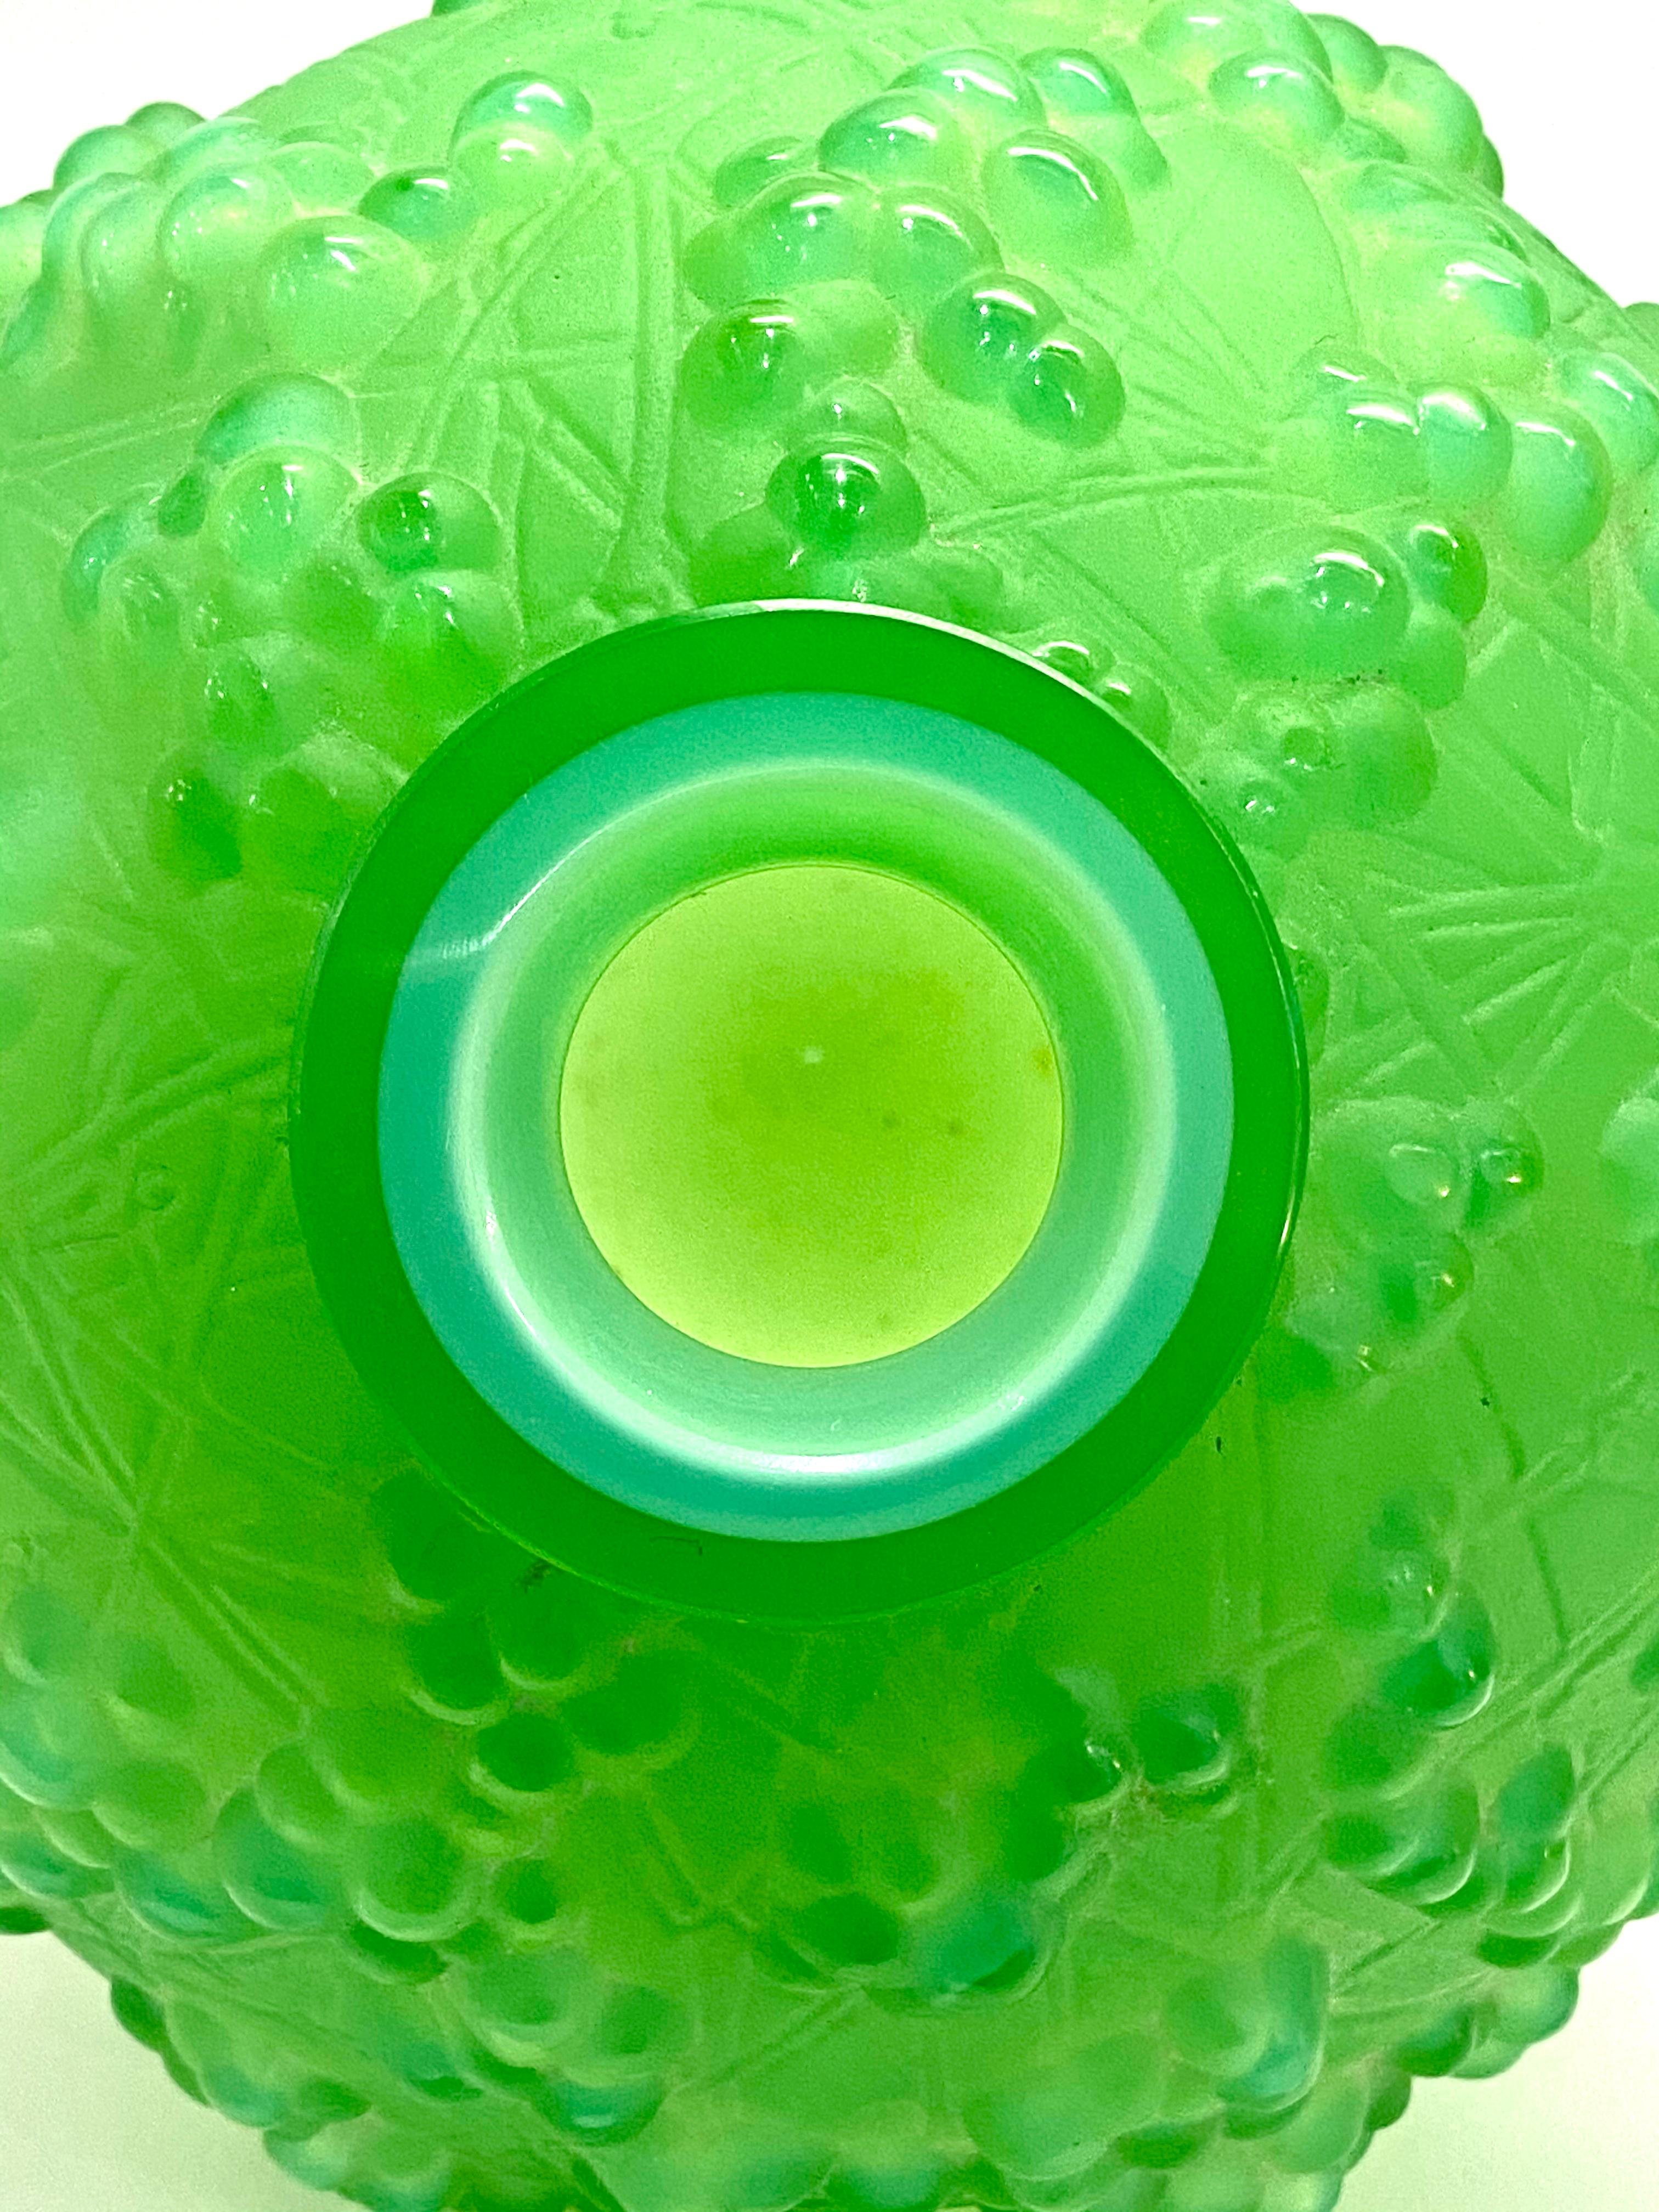 French 1924 René Lalique Druides Vase in Triple Cased Jade Green Glass Mistletoe